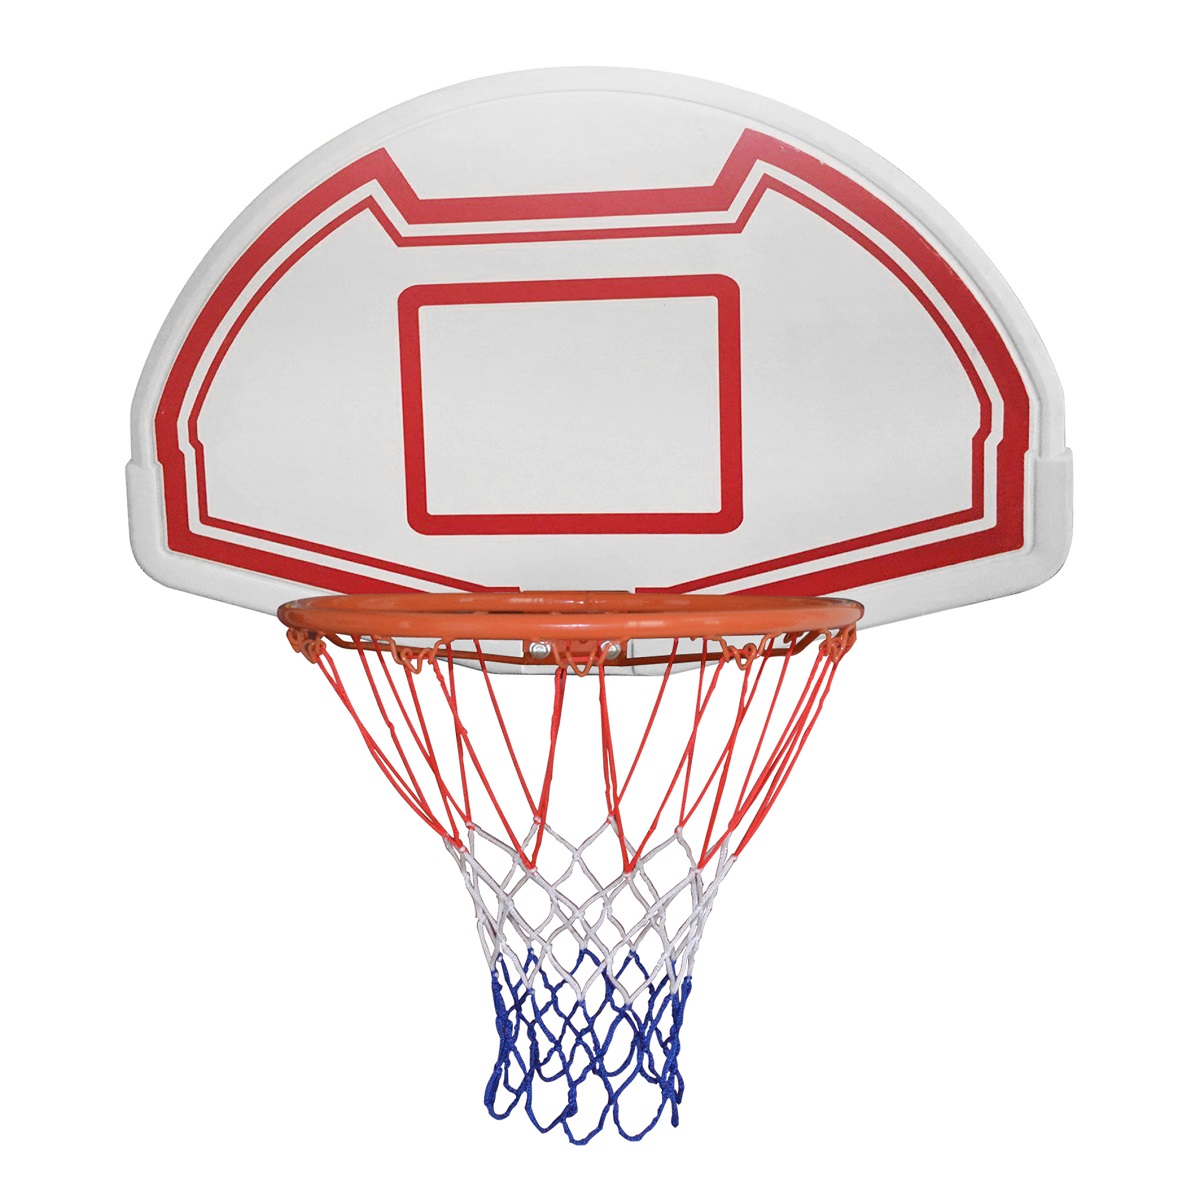  Basketbalový kôš s doskou MASTER 90 x 60 cm 